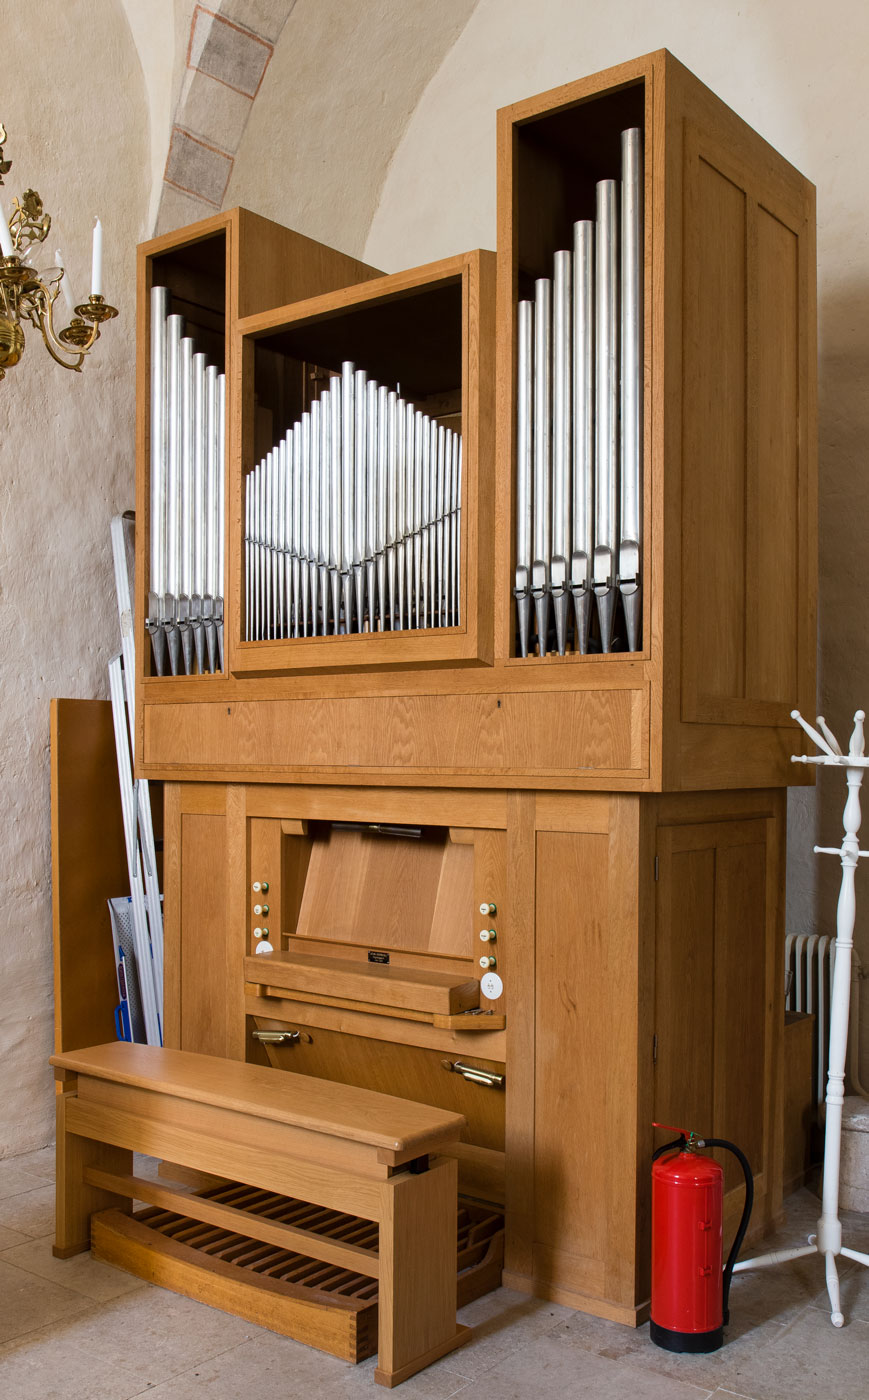 Orgel - Bäls kyrka